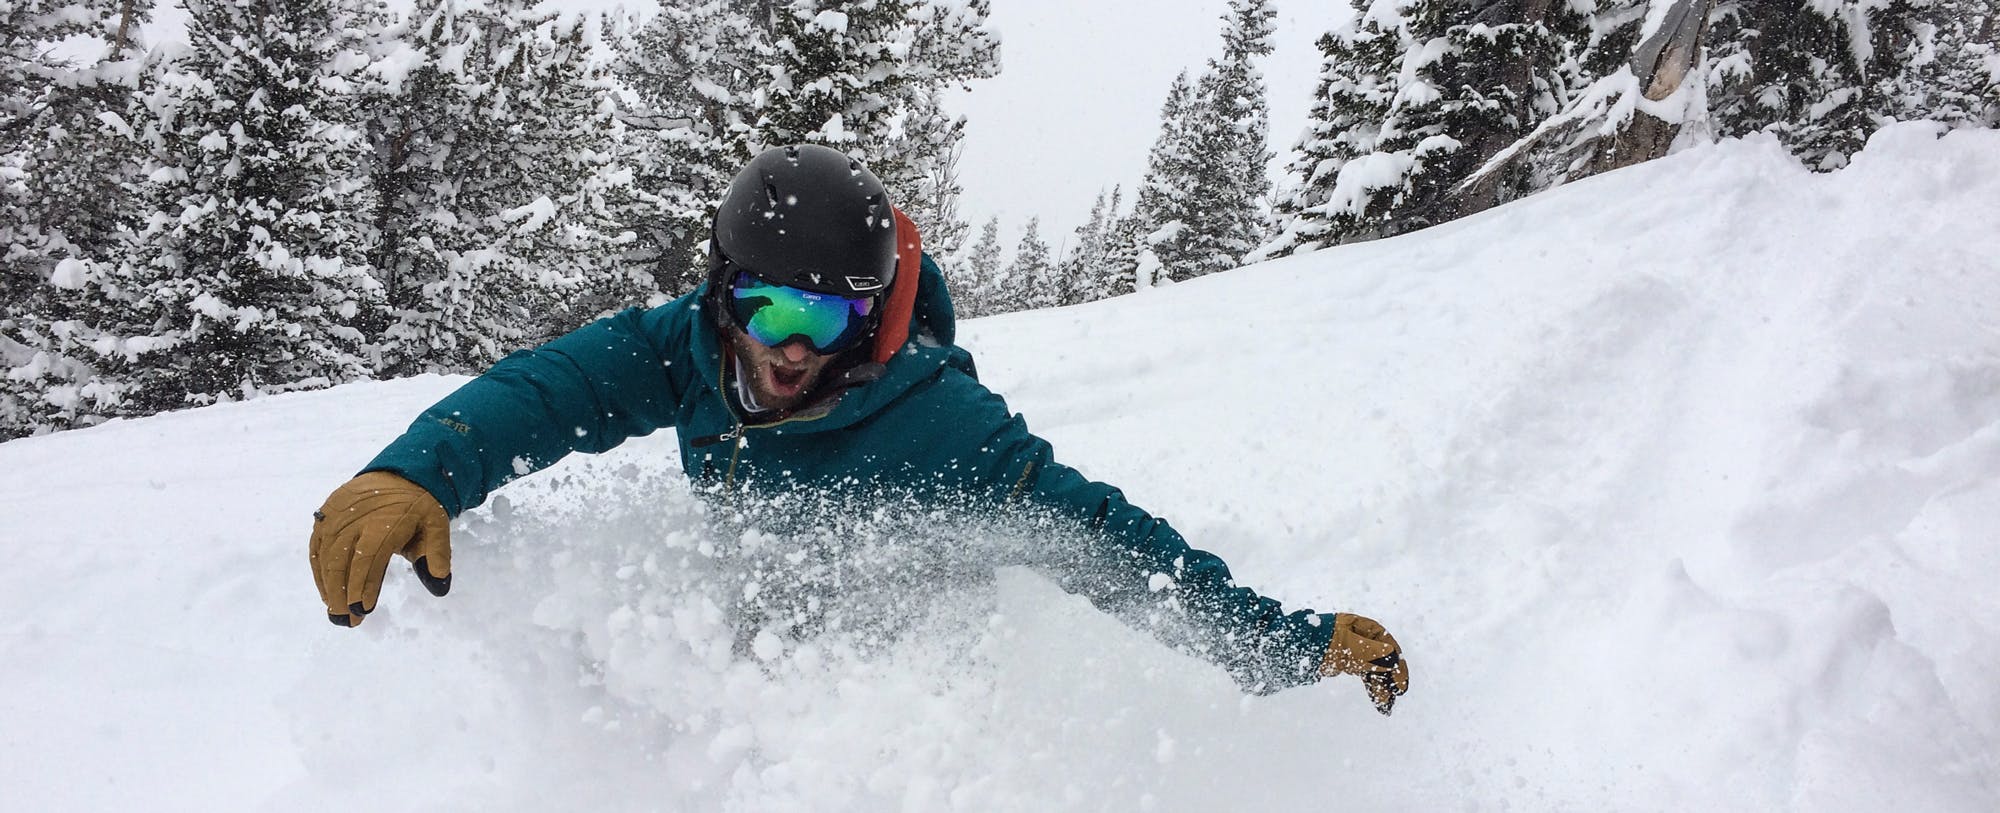 Arbor Shreddy Krueger Snowboard Review: It Rides Like A Dream